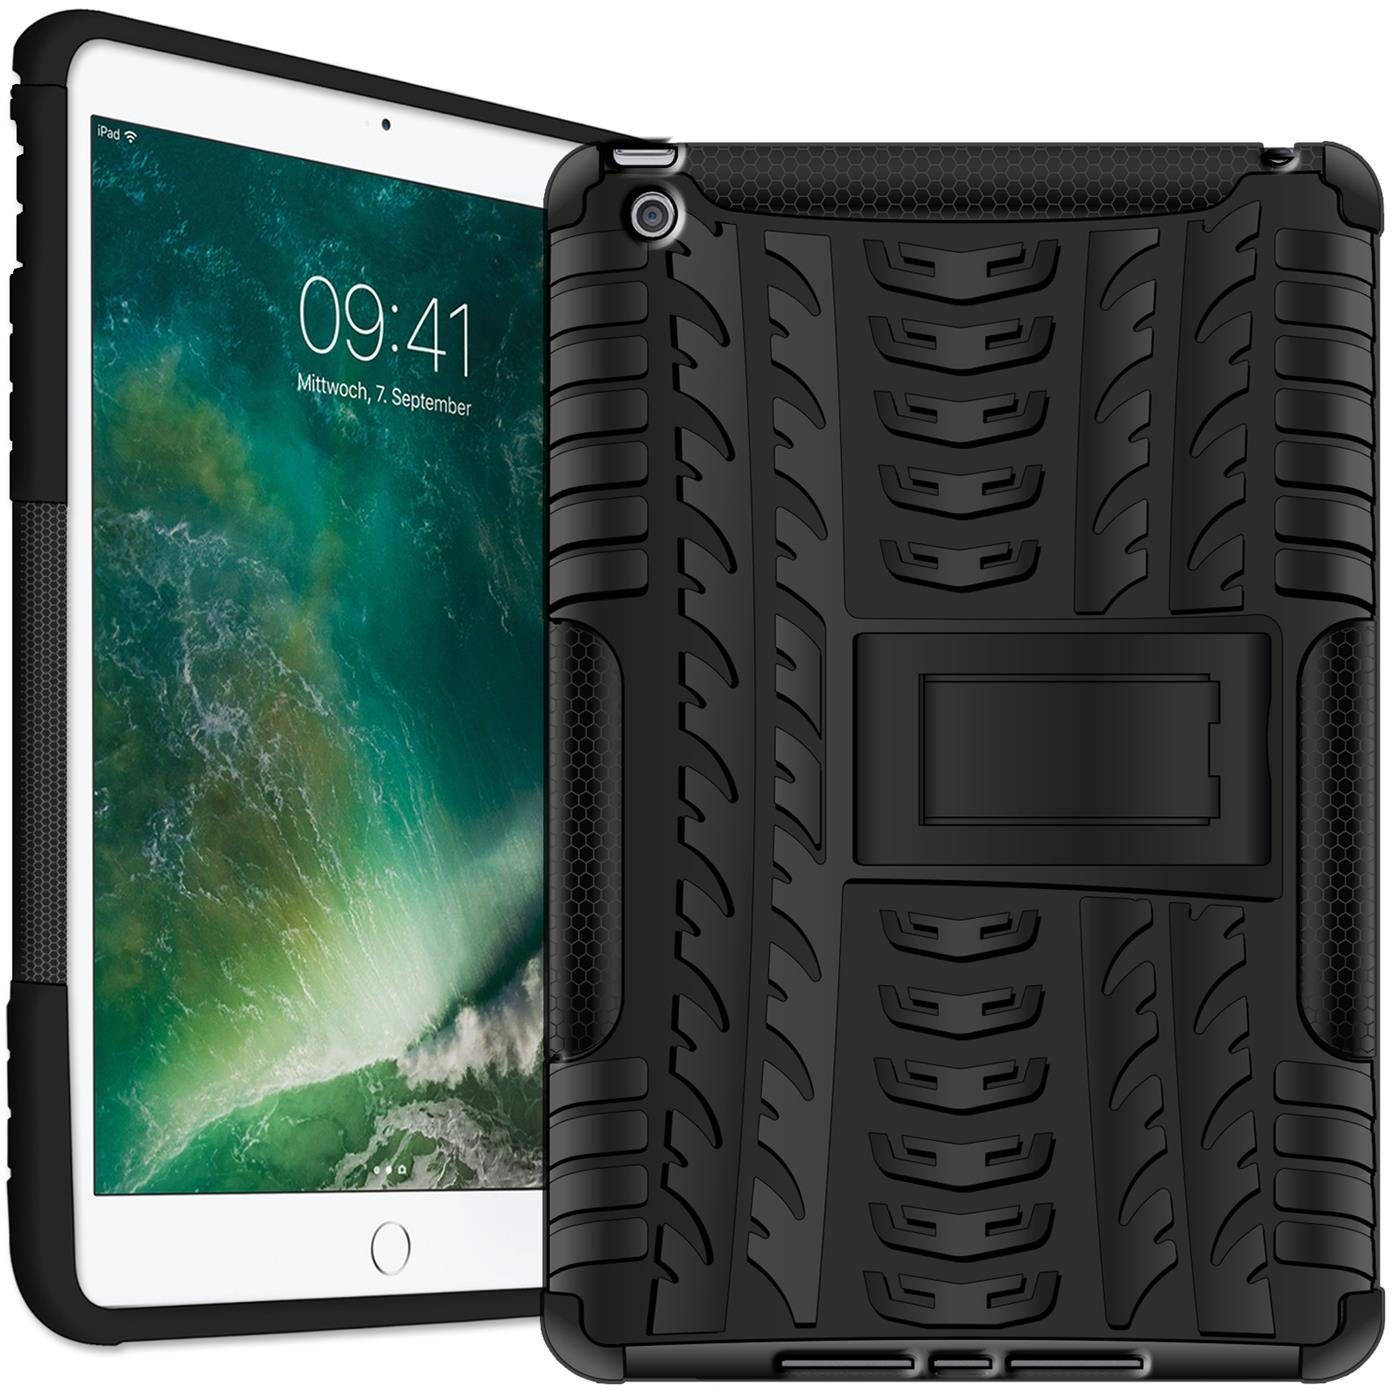 CoolGadget Tablet-Hülle Hybrid Outdoor Hülle für Apple iPad Air 2 9,7 Zoll, Hülle massiv Outdoor Schutzhülle für iPad Air 2 Tablet Case